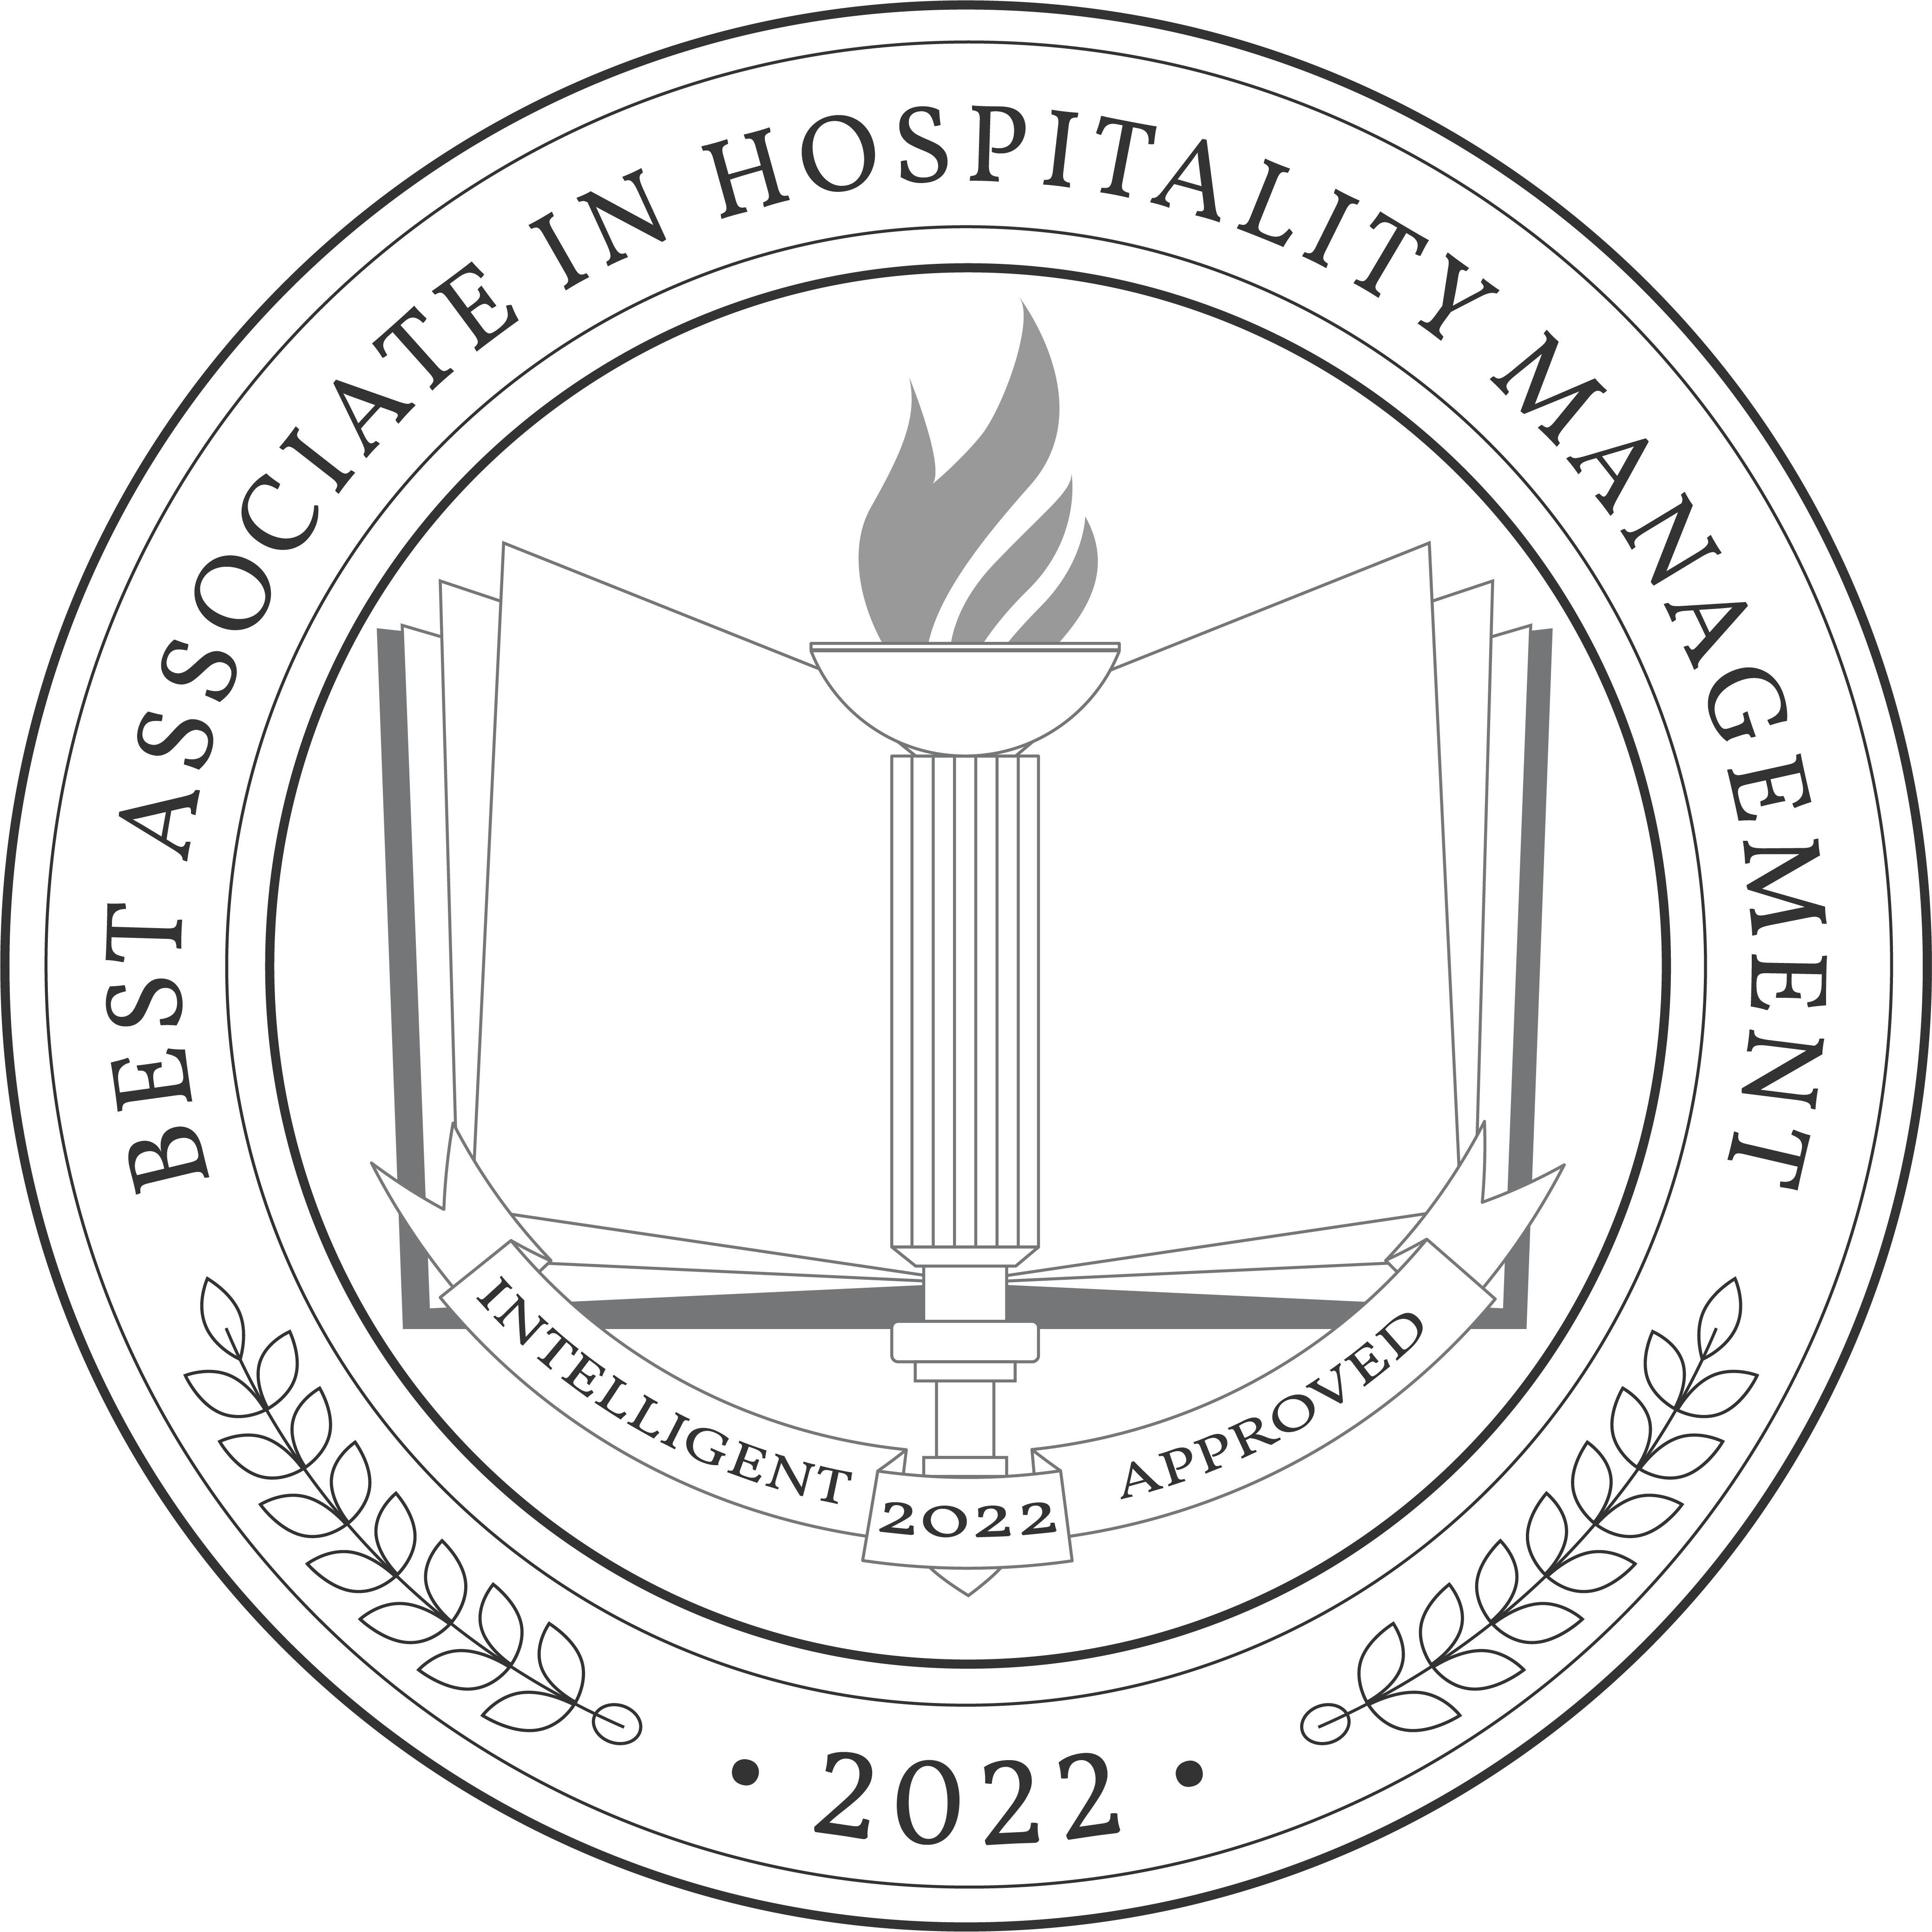 Best Online Associate in Hospitality Management Programs Badge